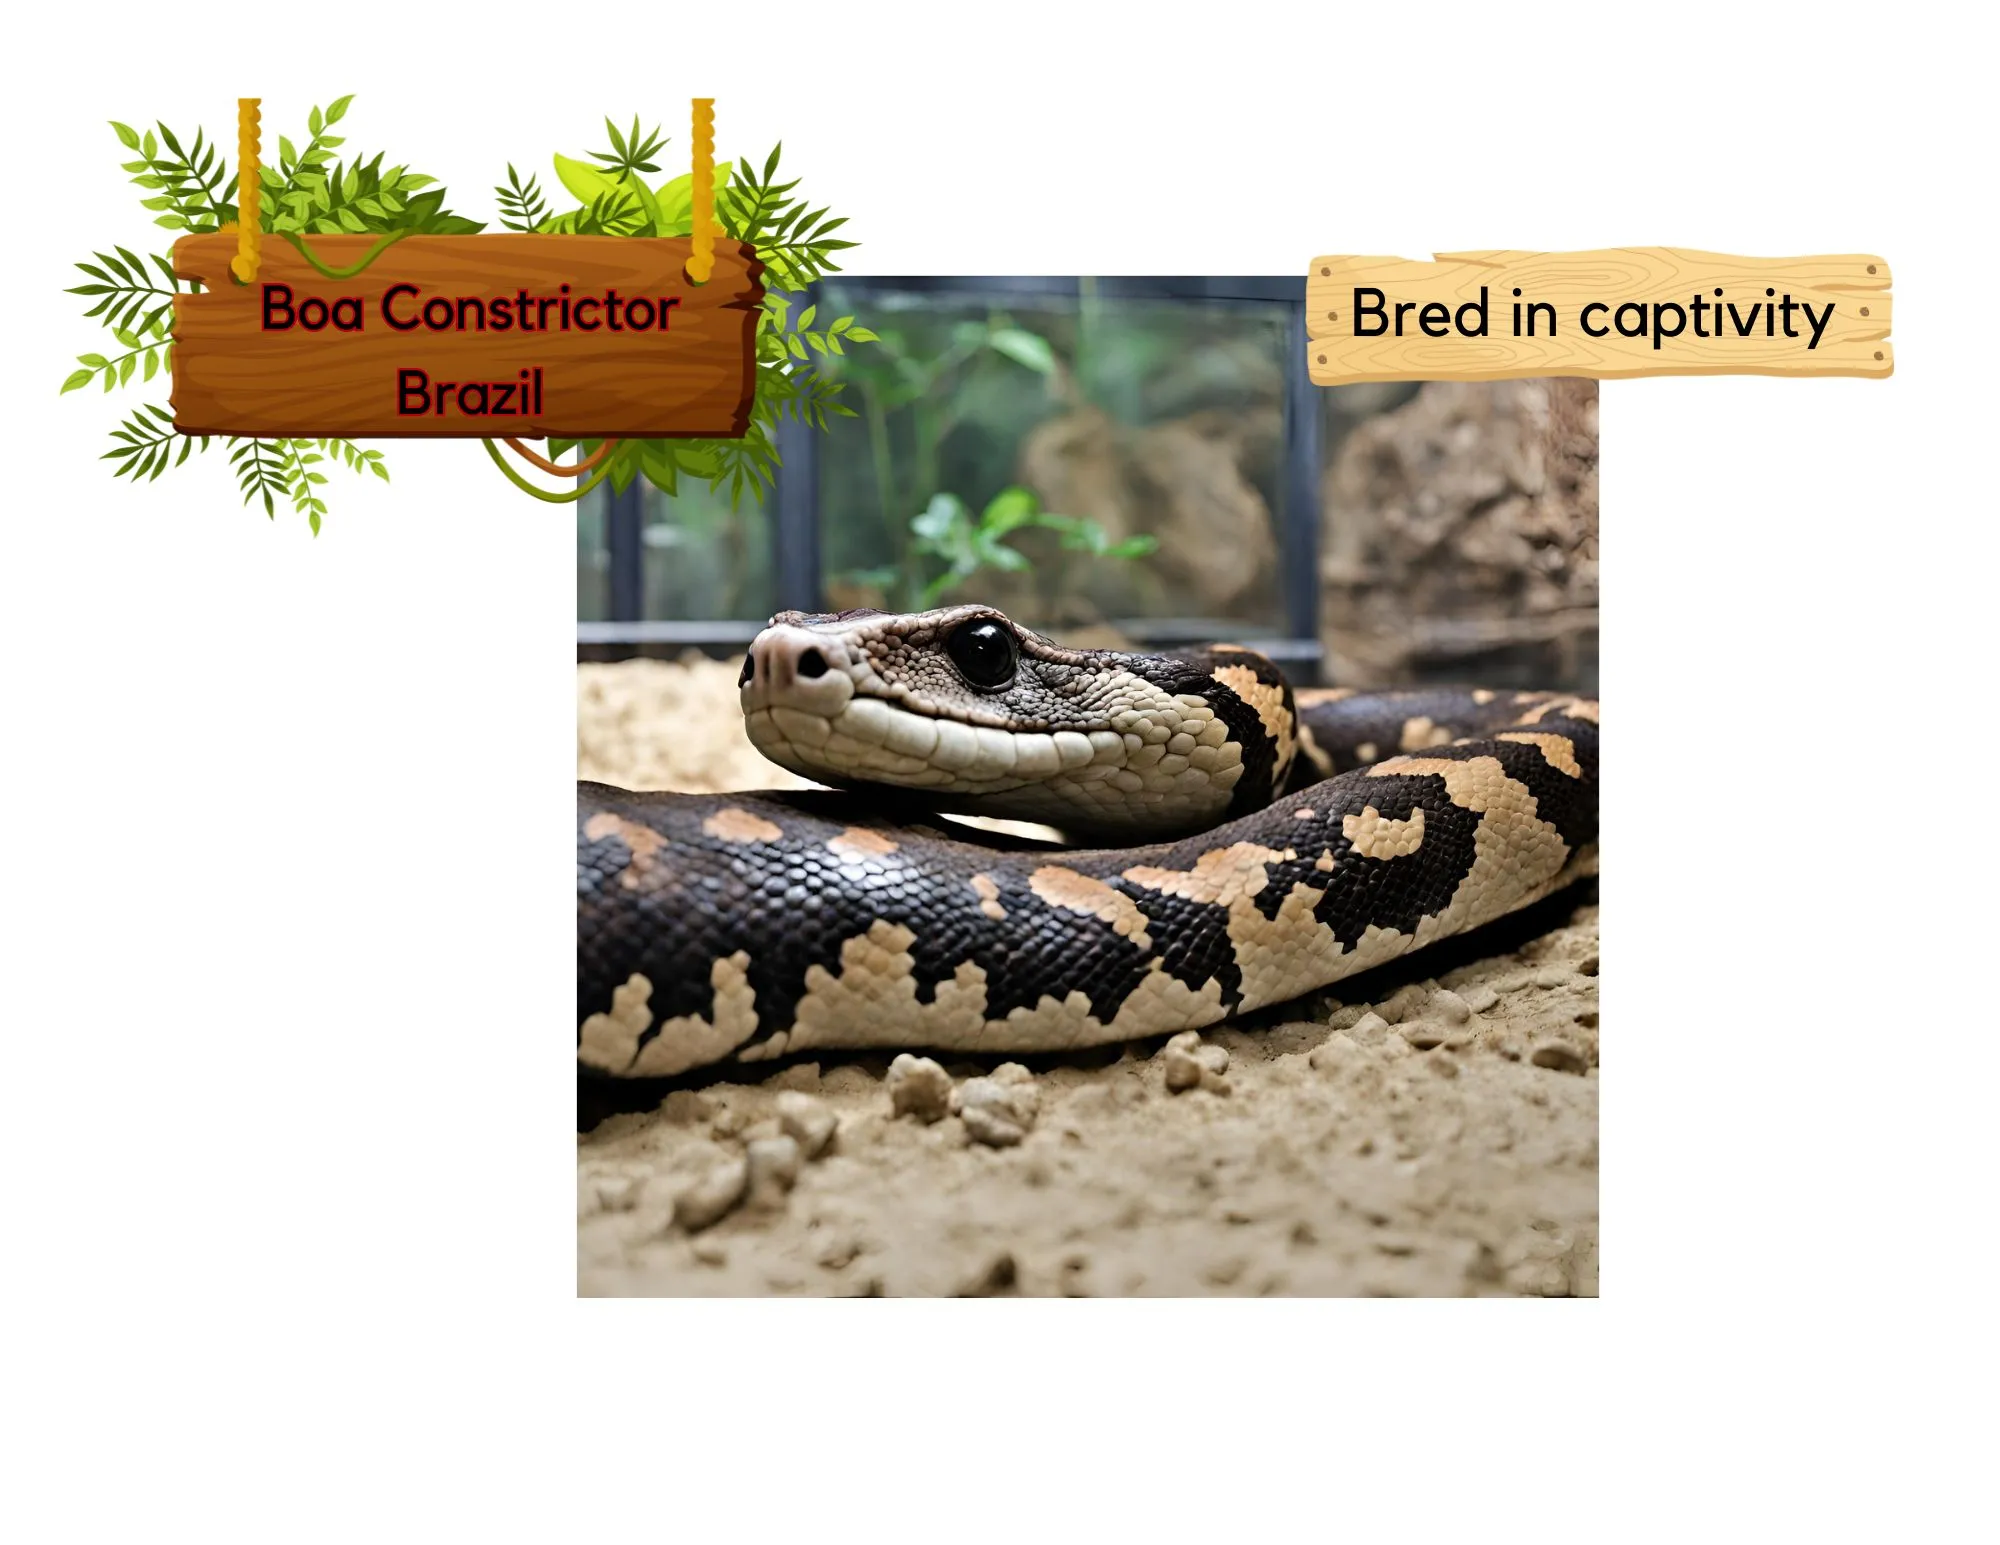 Boa Constrictor from Brasil